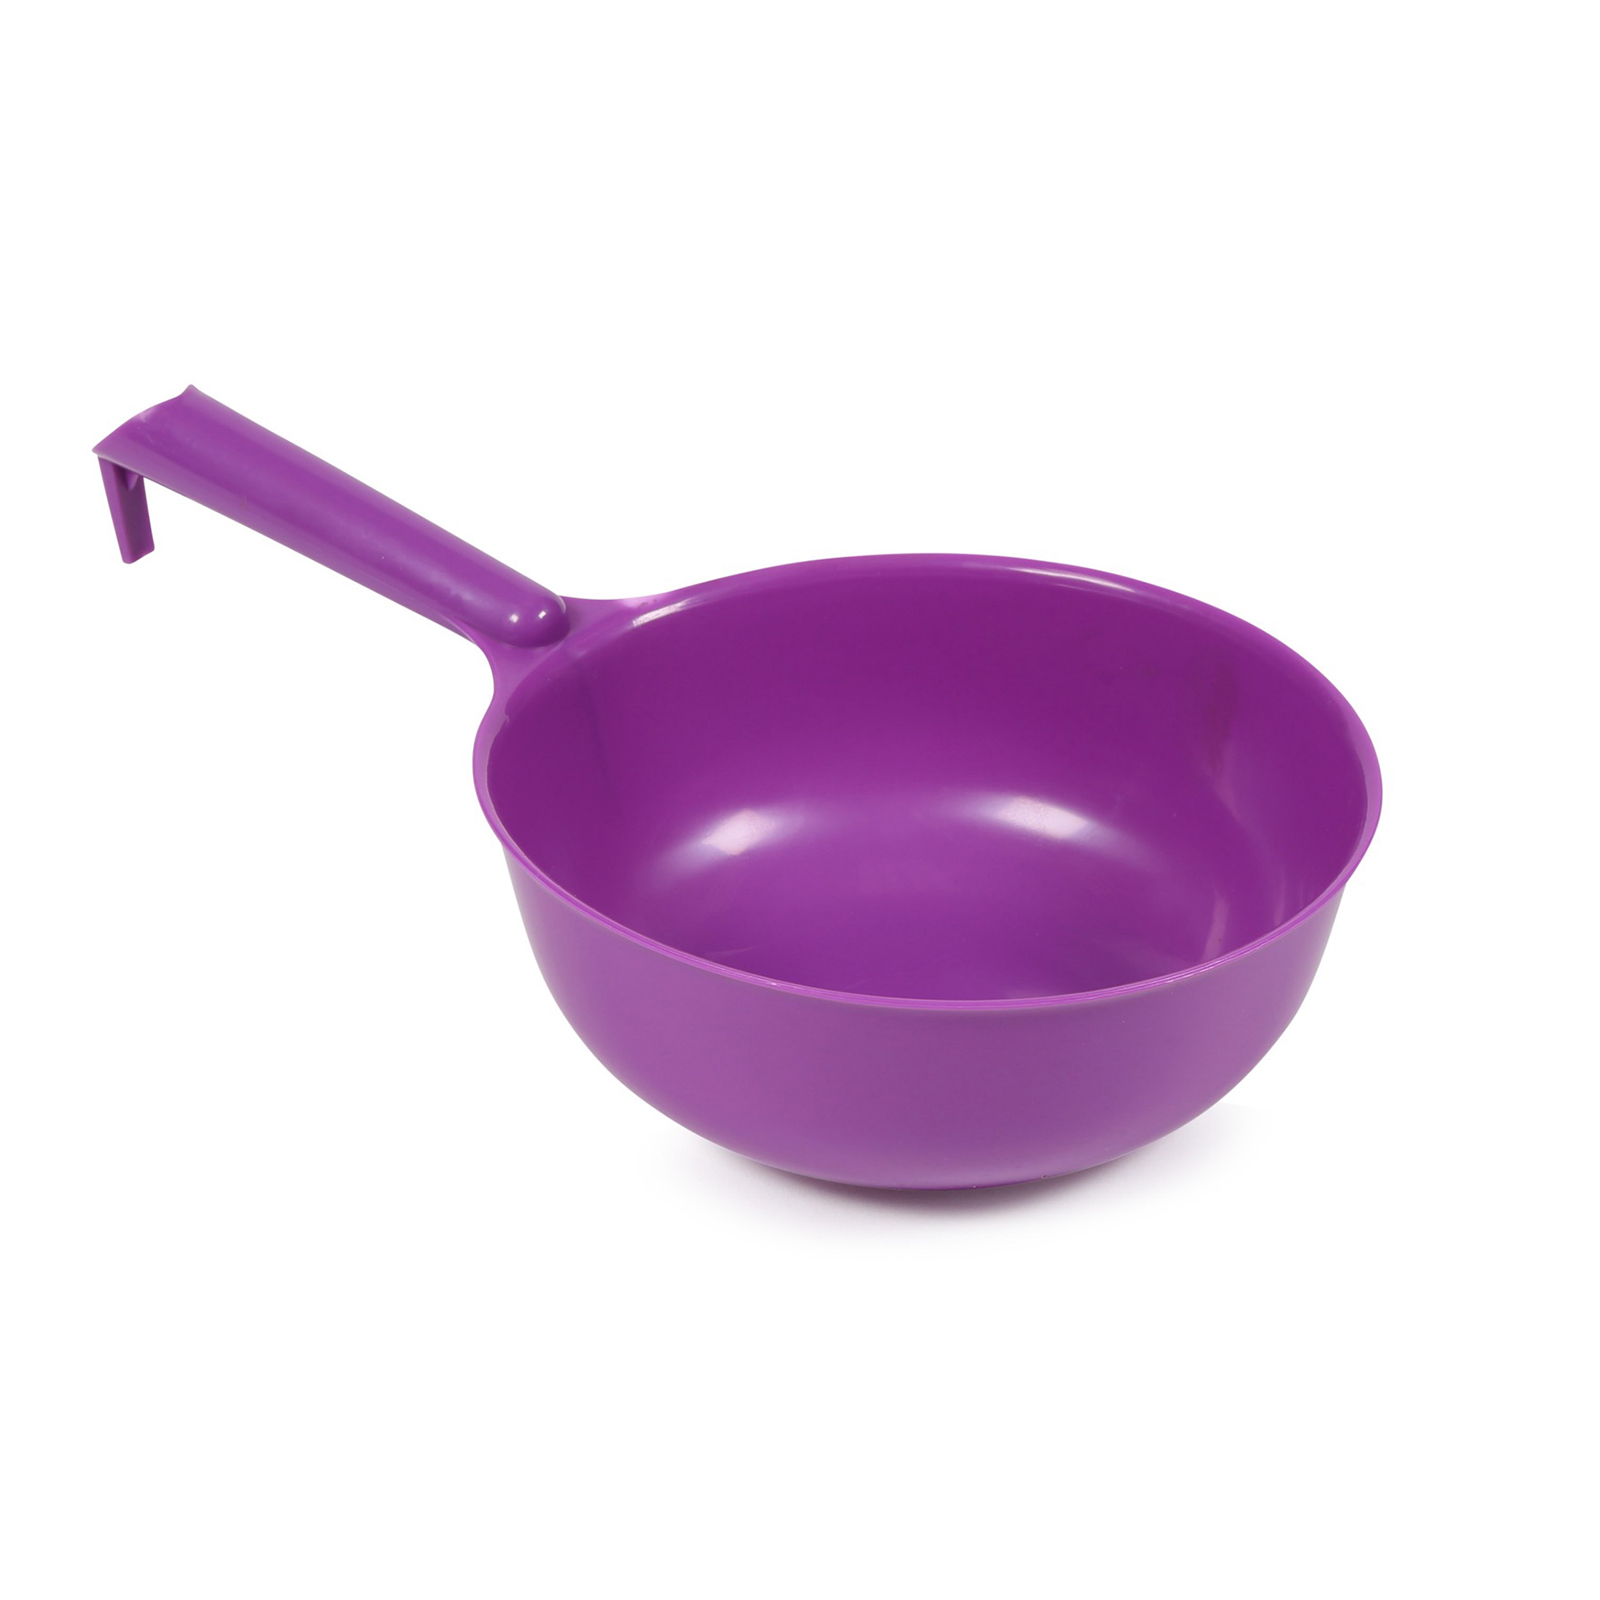 Ковшик для корма SHIRES EZI-KIT, фиолетовый